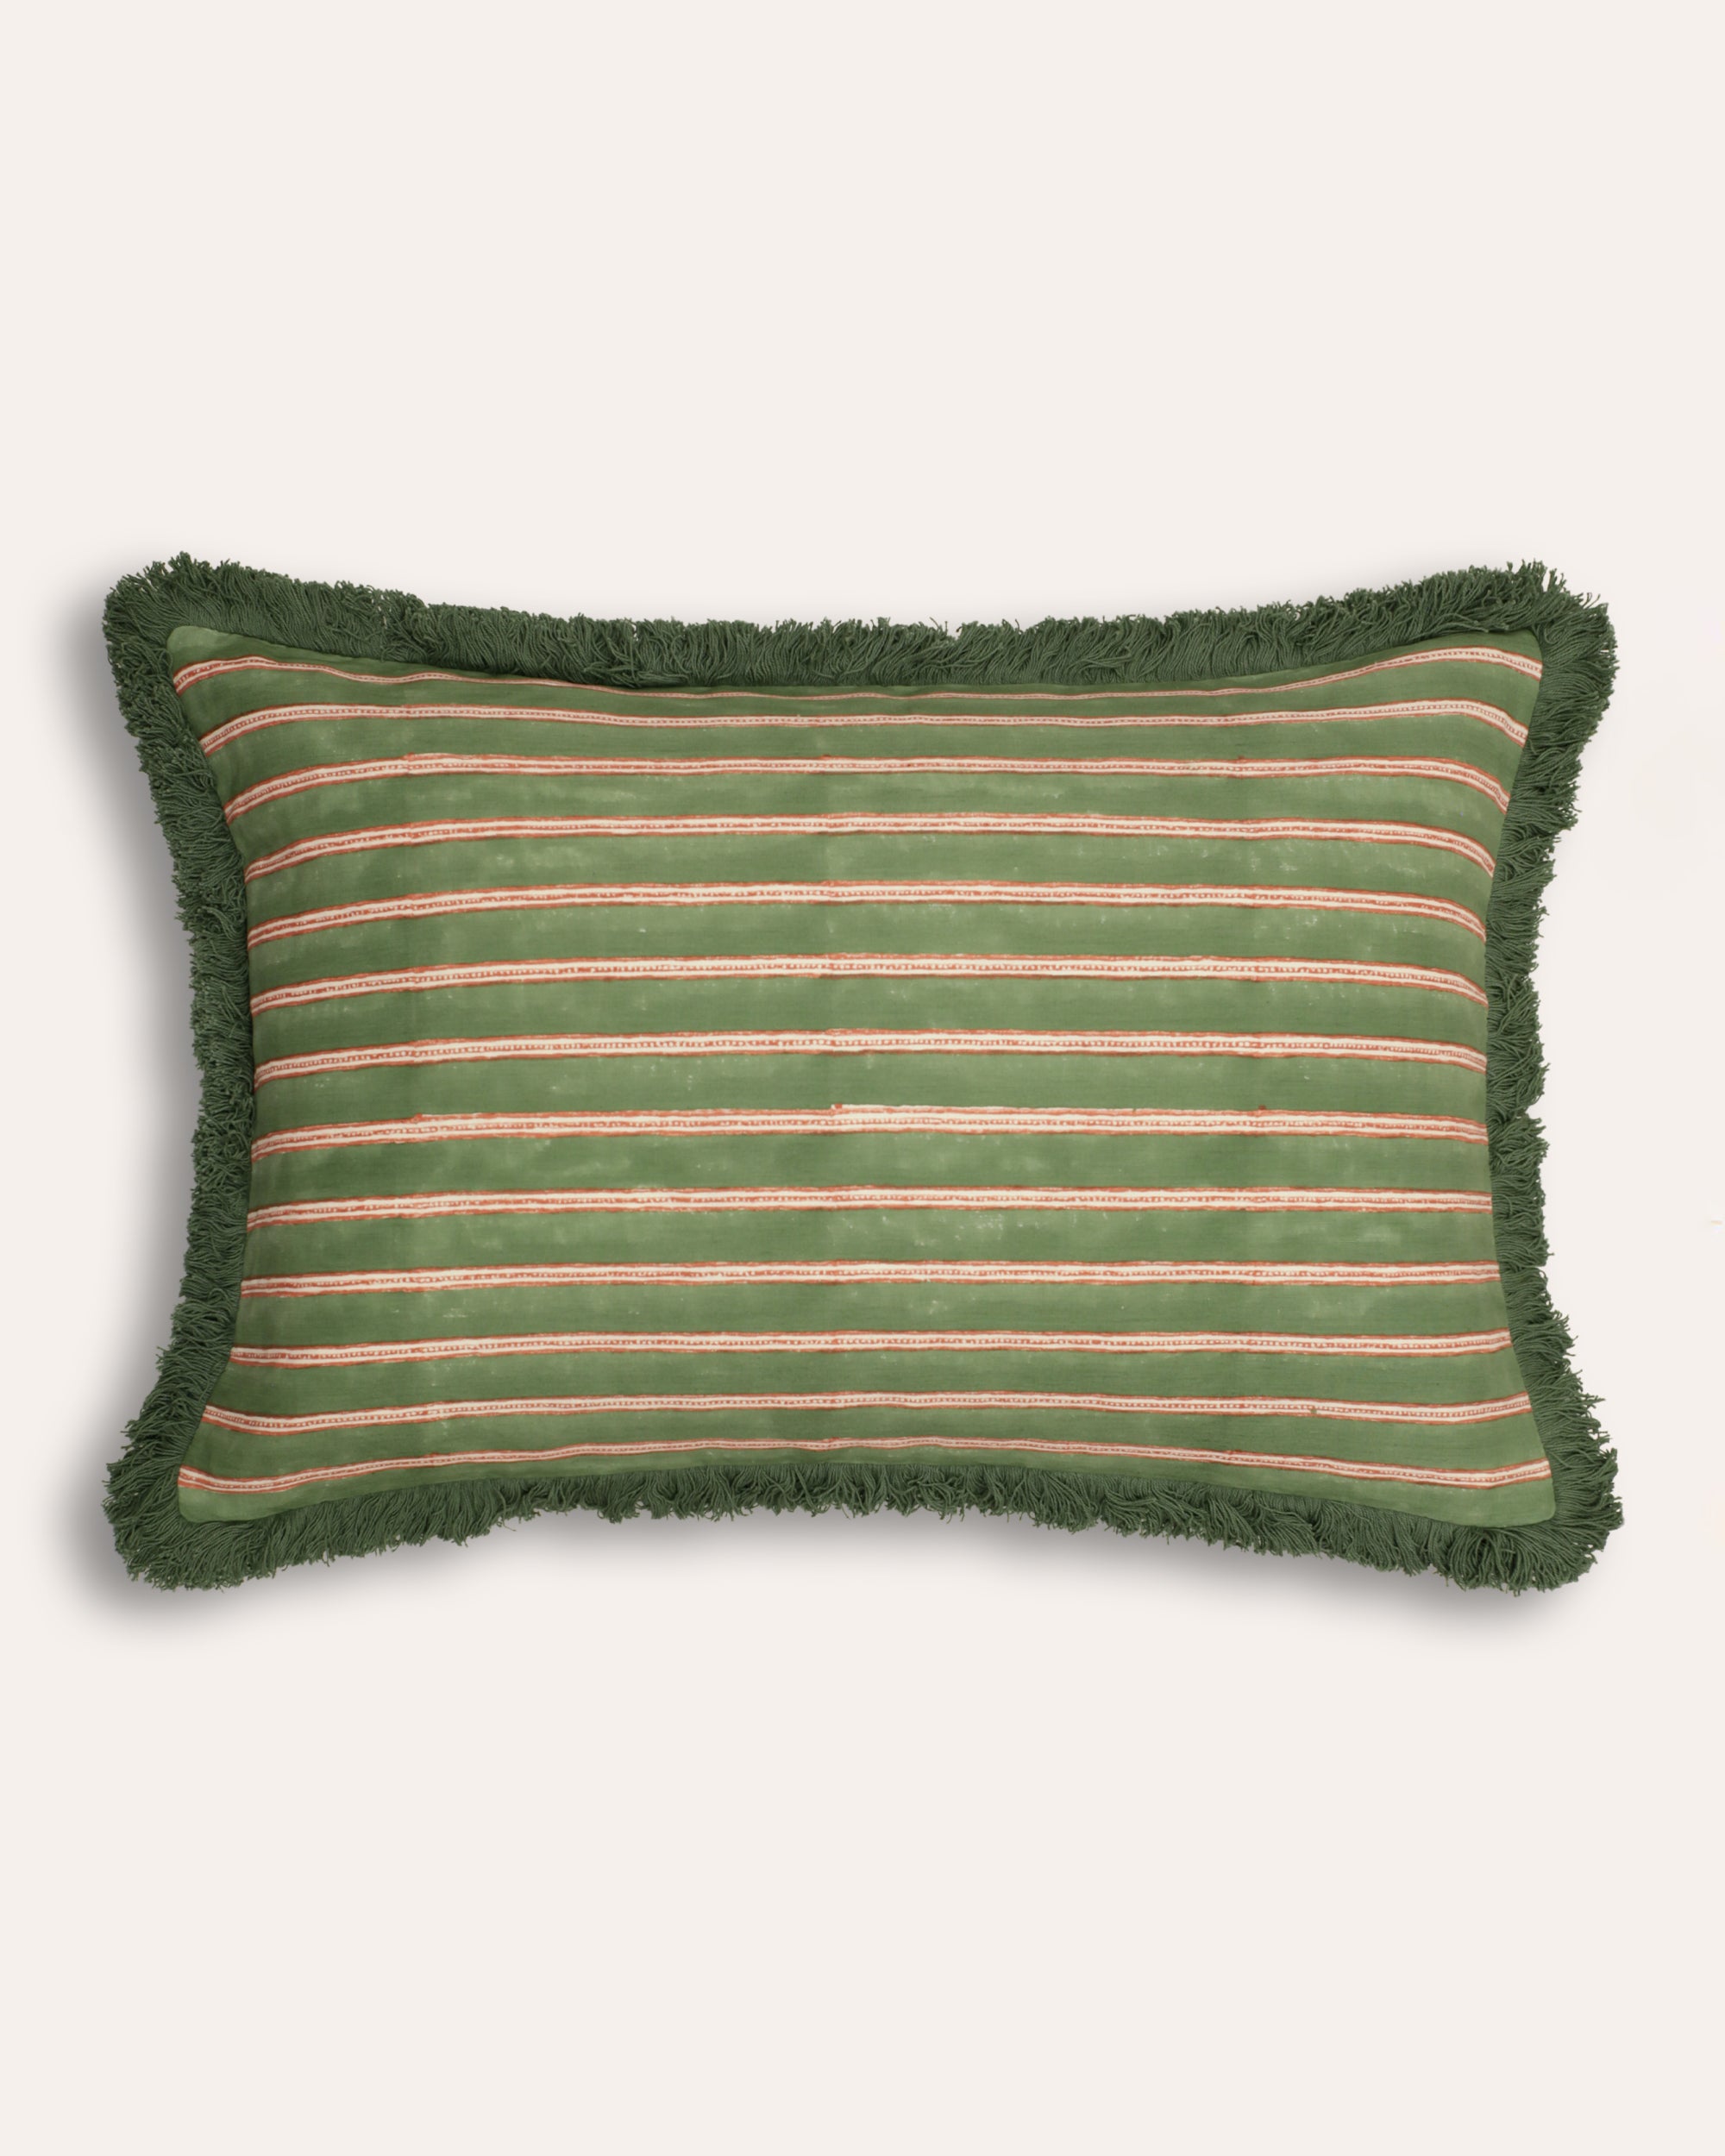 Edo Stripe Cushion - Moss Green and Pink